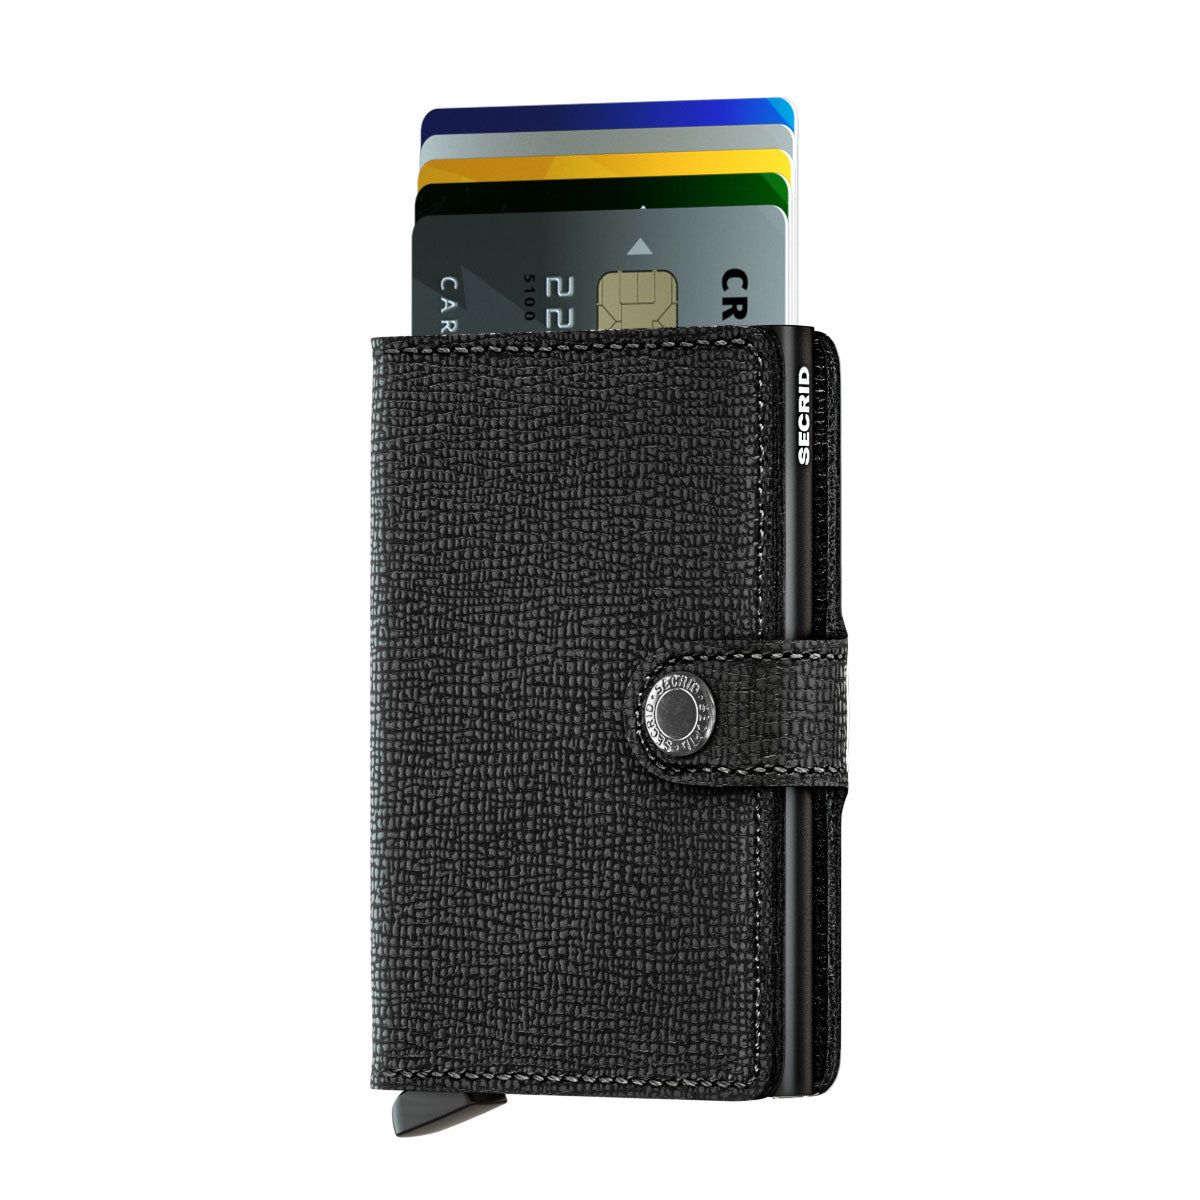 Secrid Mini Wallet Crisple Black